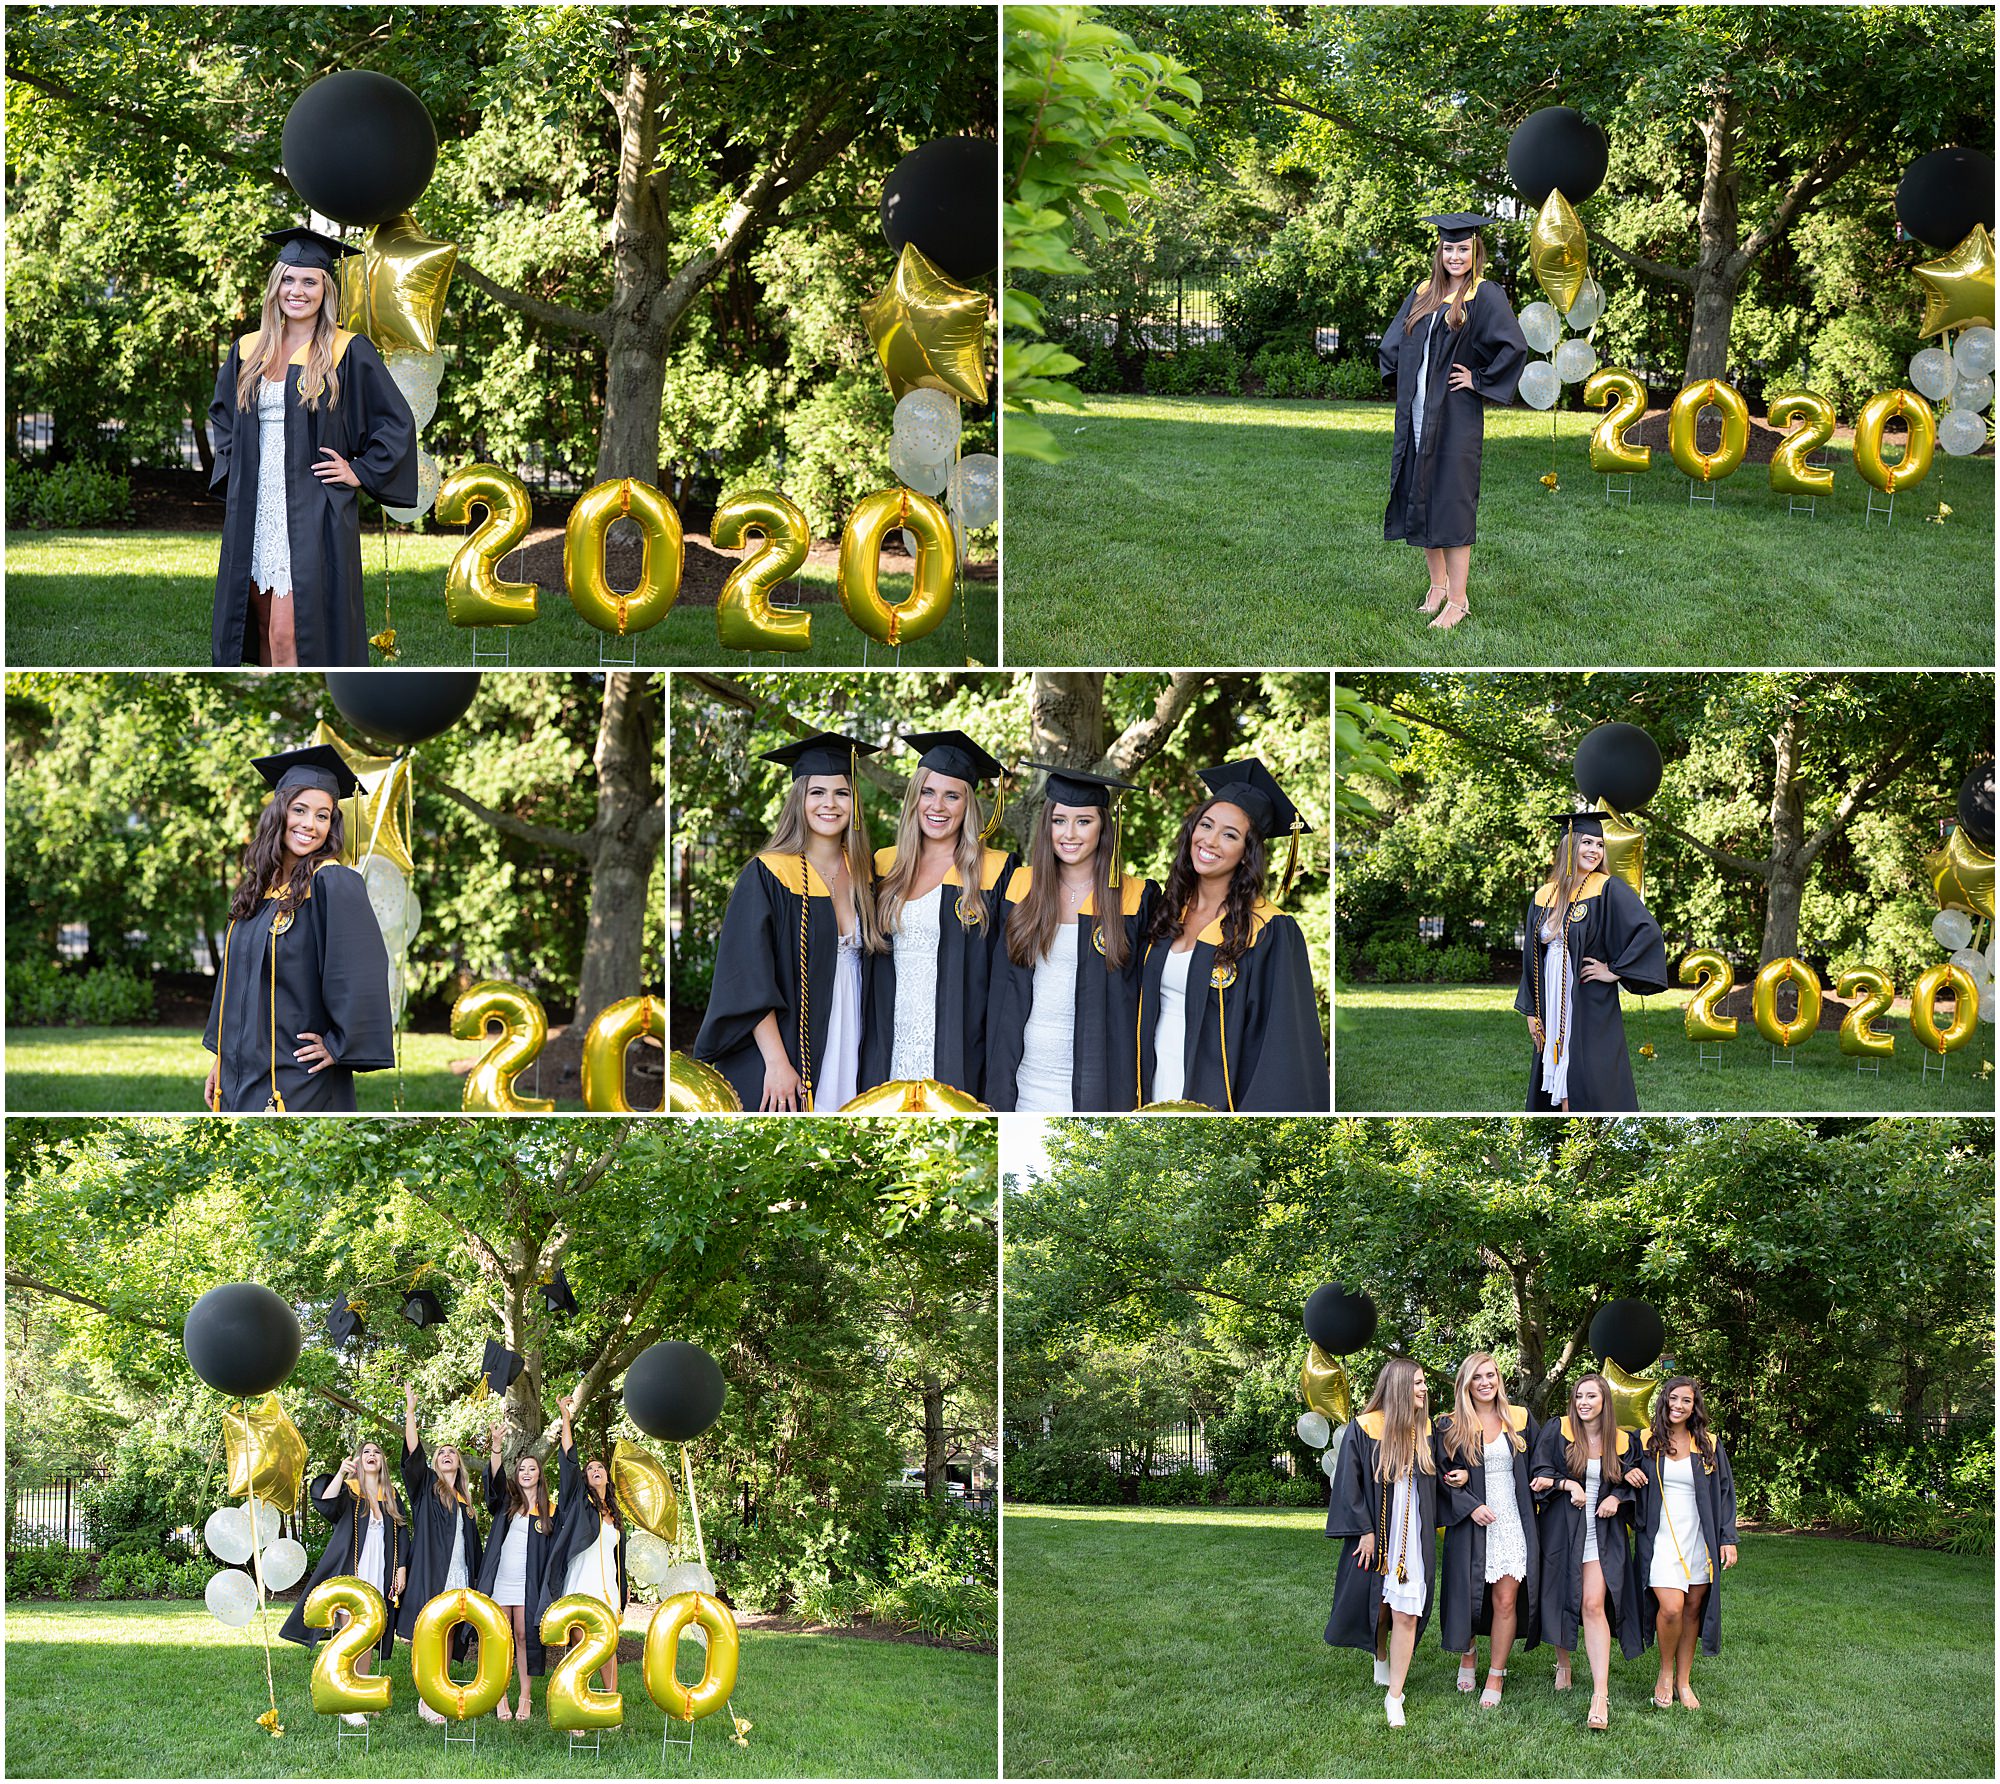 2020 HS graduates celebrate a virtual graduation